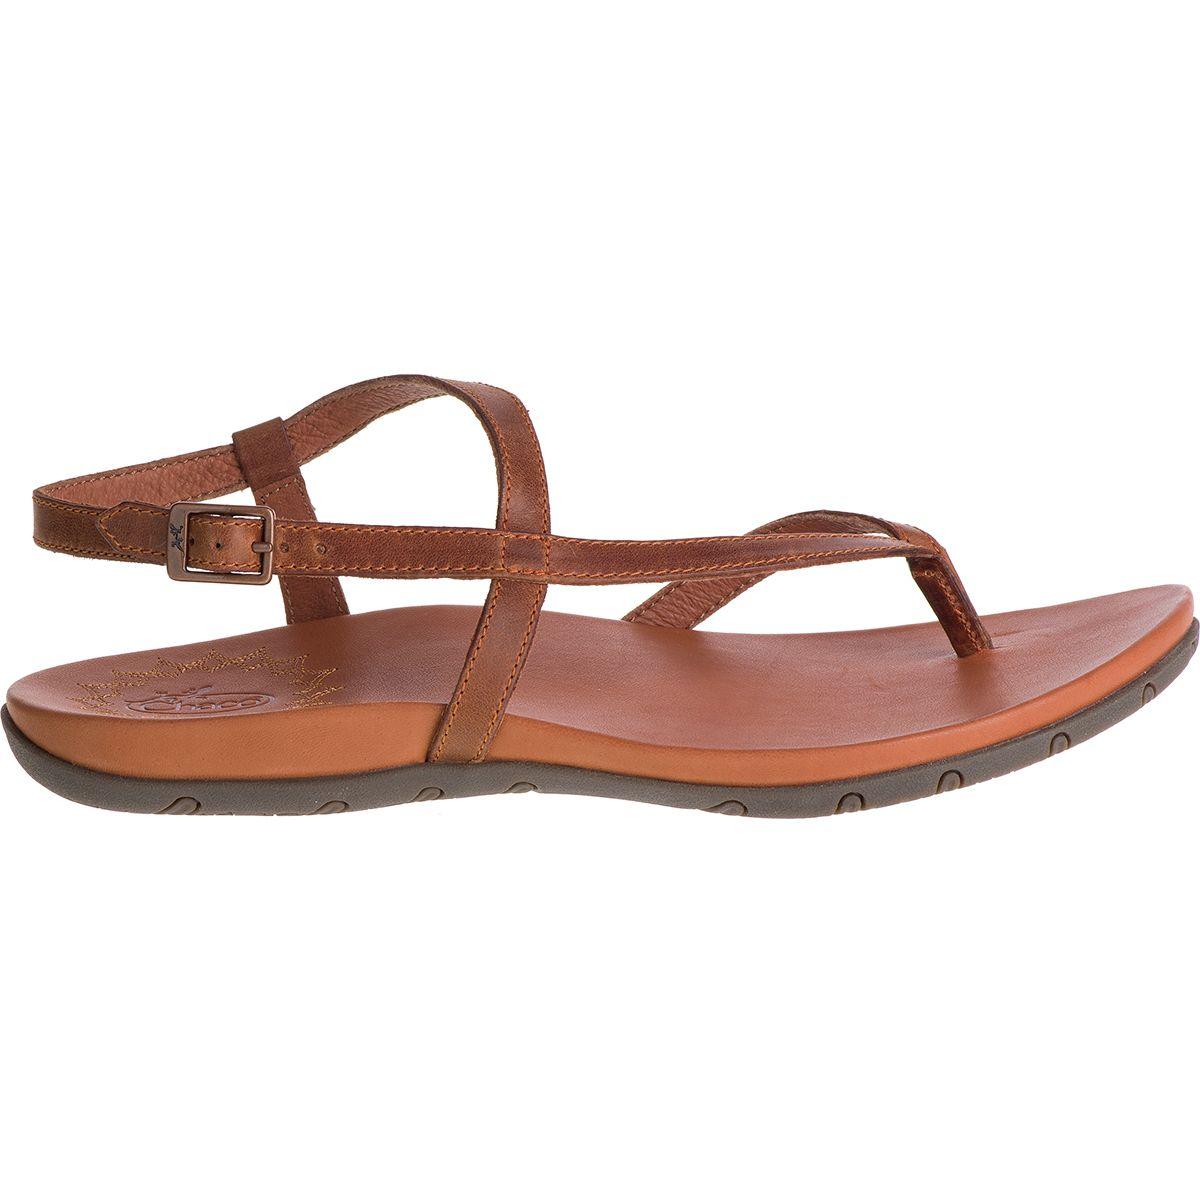 Chaco Leather Rowan Sandal in Rust (Brown) - Lyst